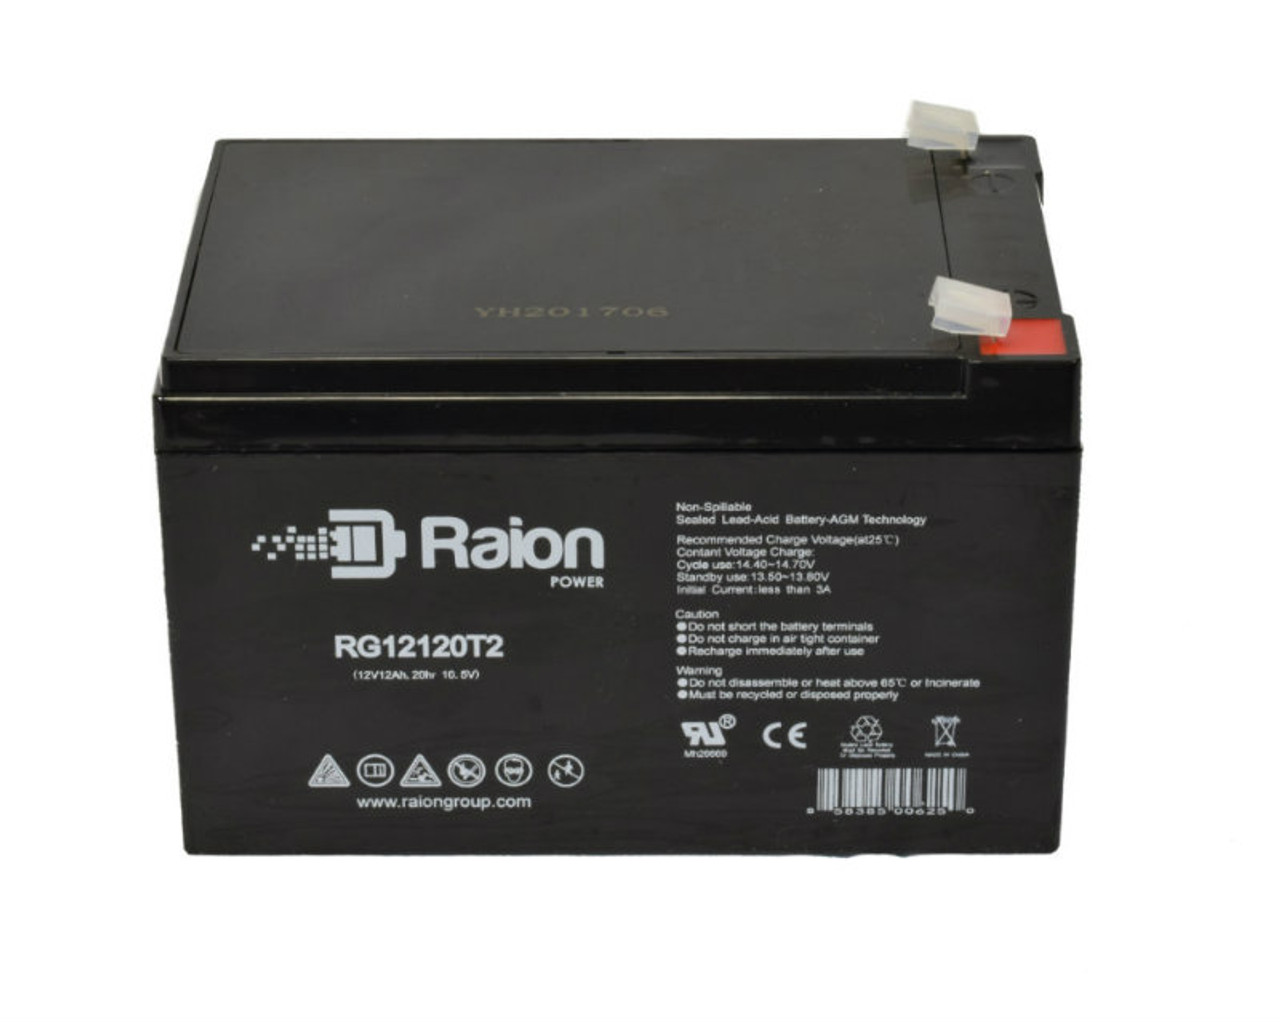 Raion Power RG12120T2 SLA Battery for Dyna-Ray 12